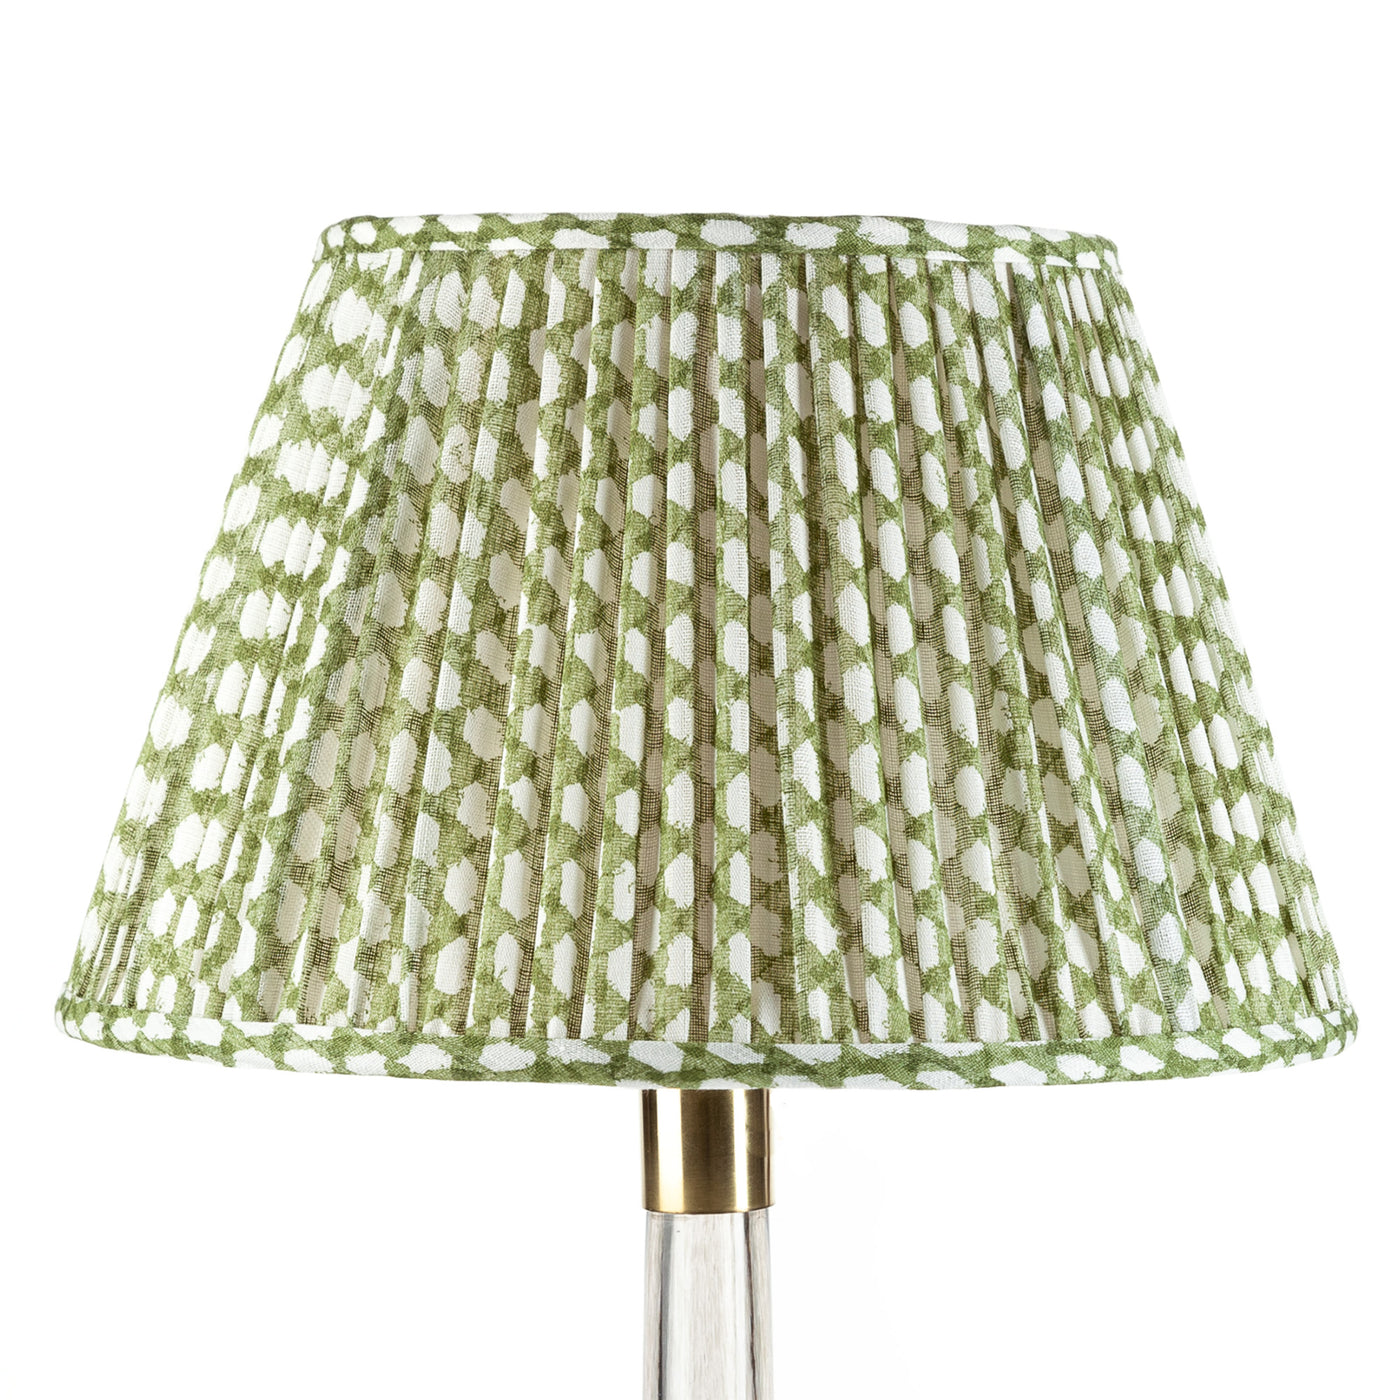 18" Fermoie Lampshade - Wicker in Green  | Newport Lamp And Shade | Located in Newport, RI